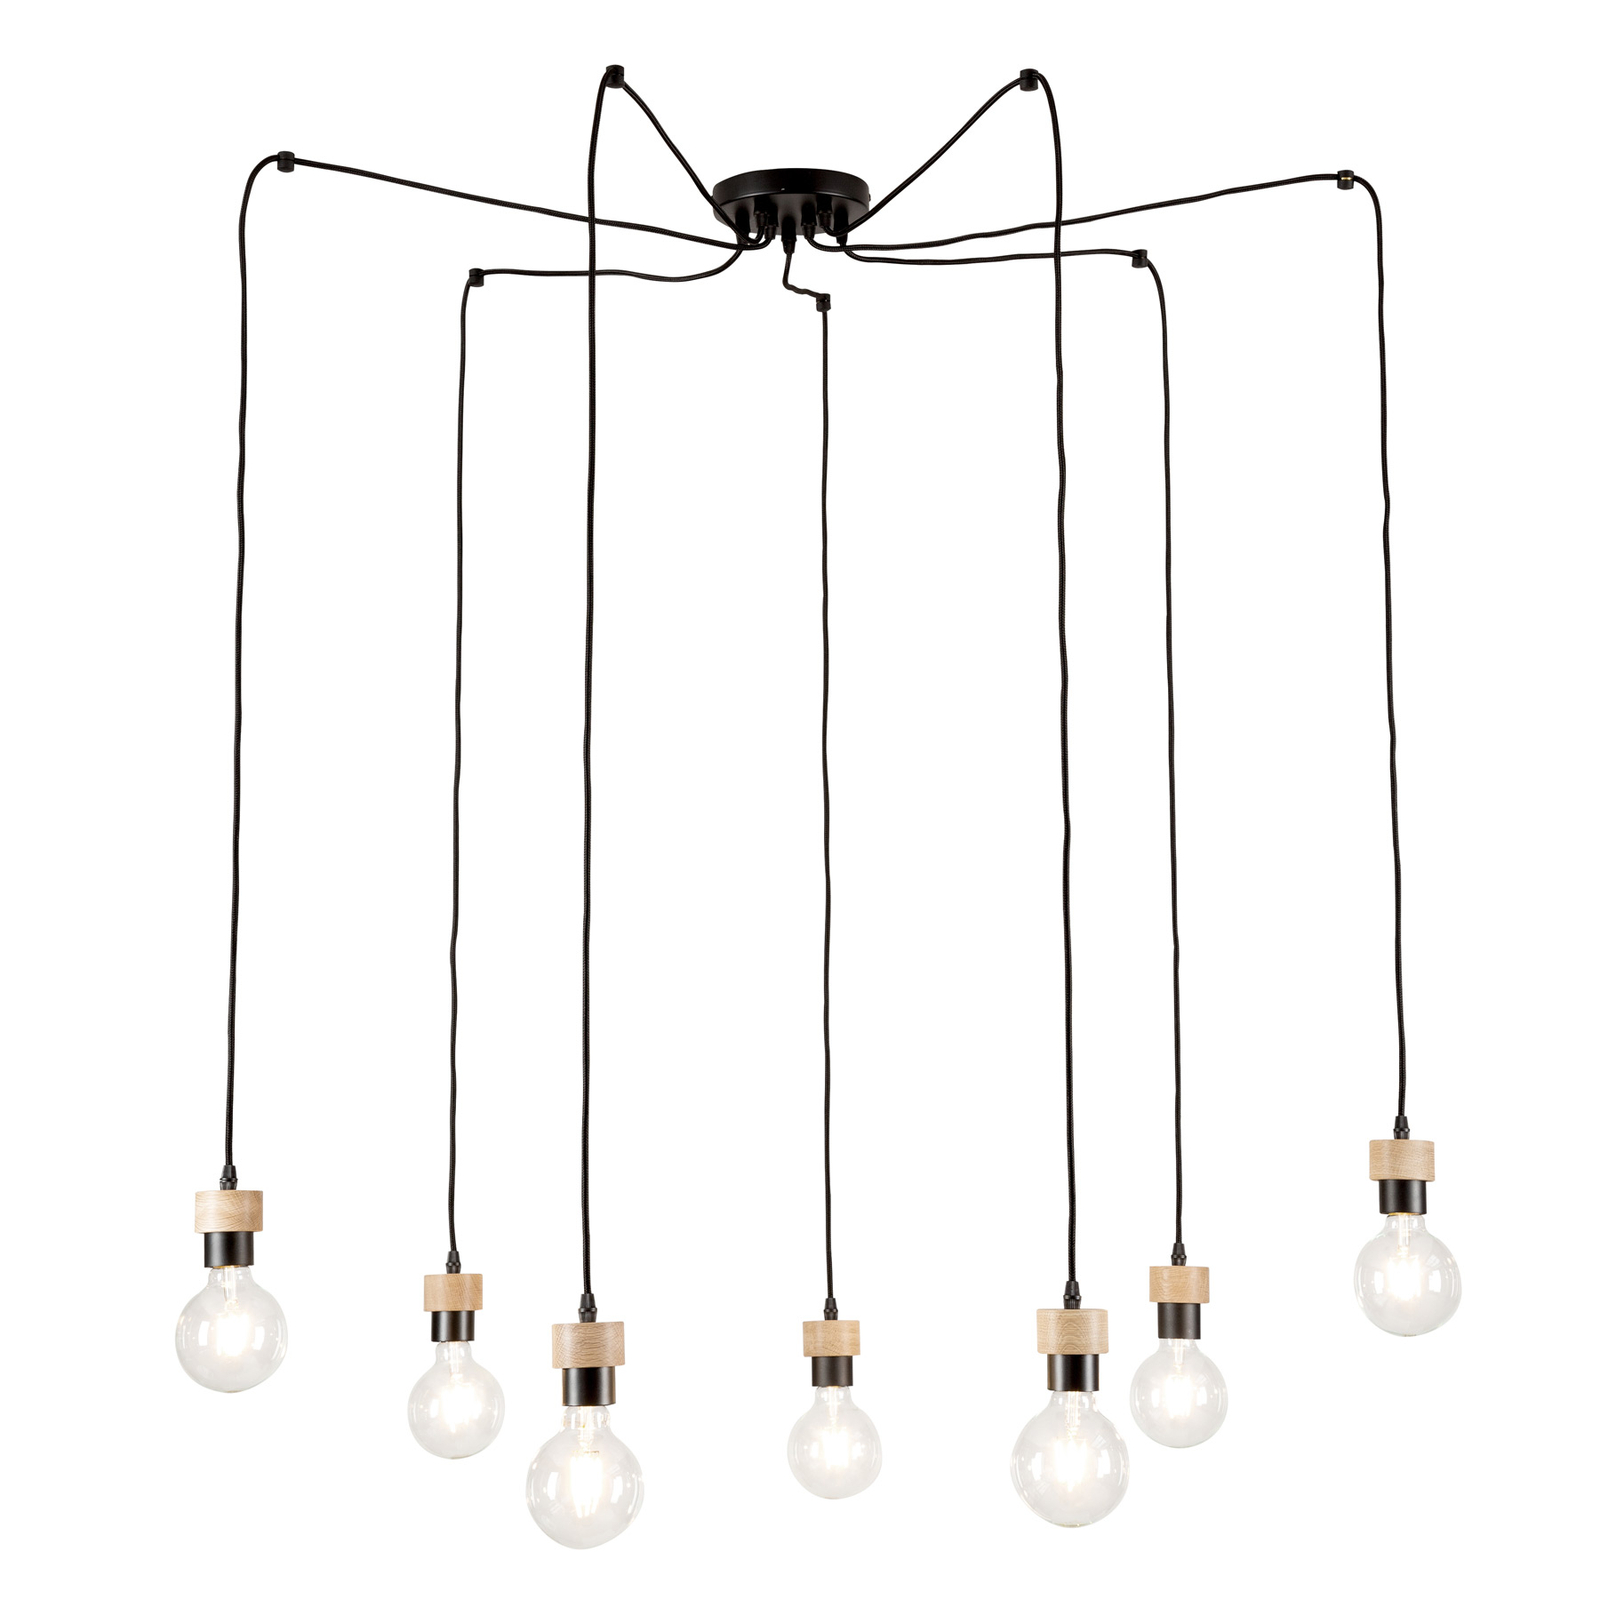 Envolight Merlo hanging light decentralised 7-bulb